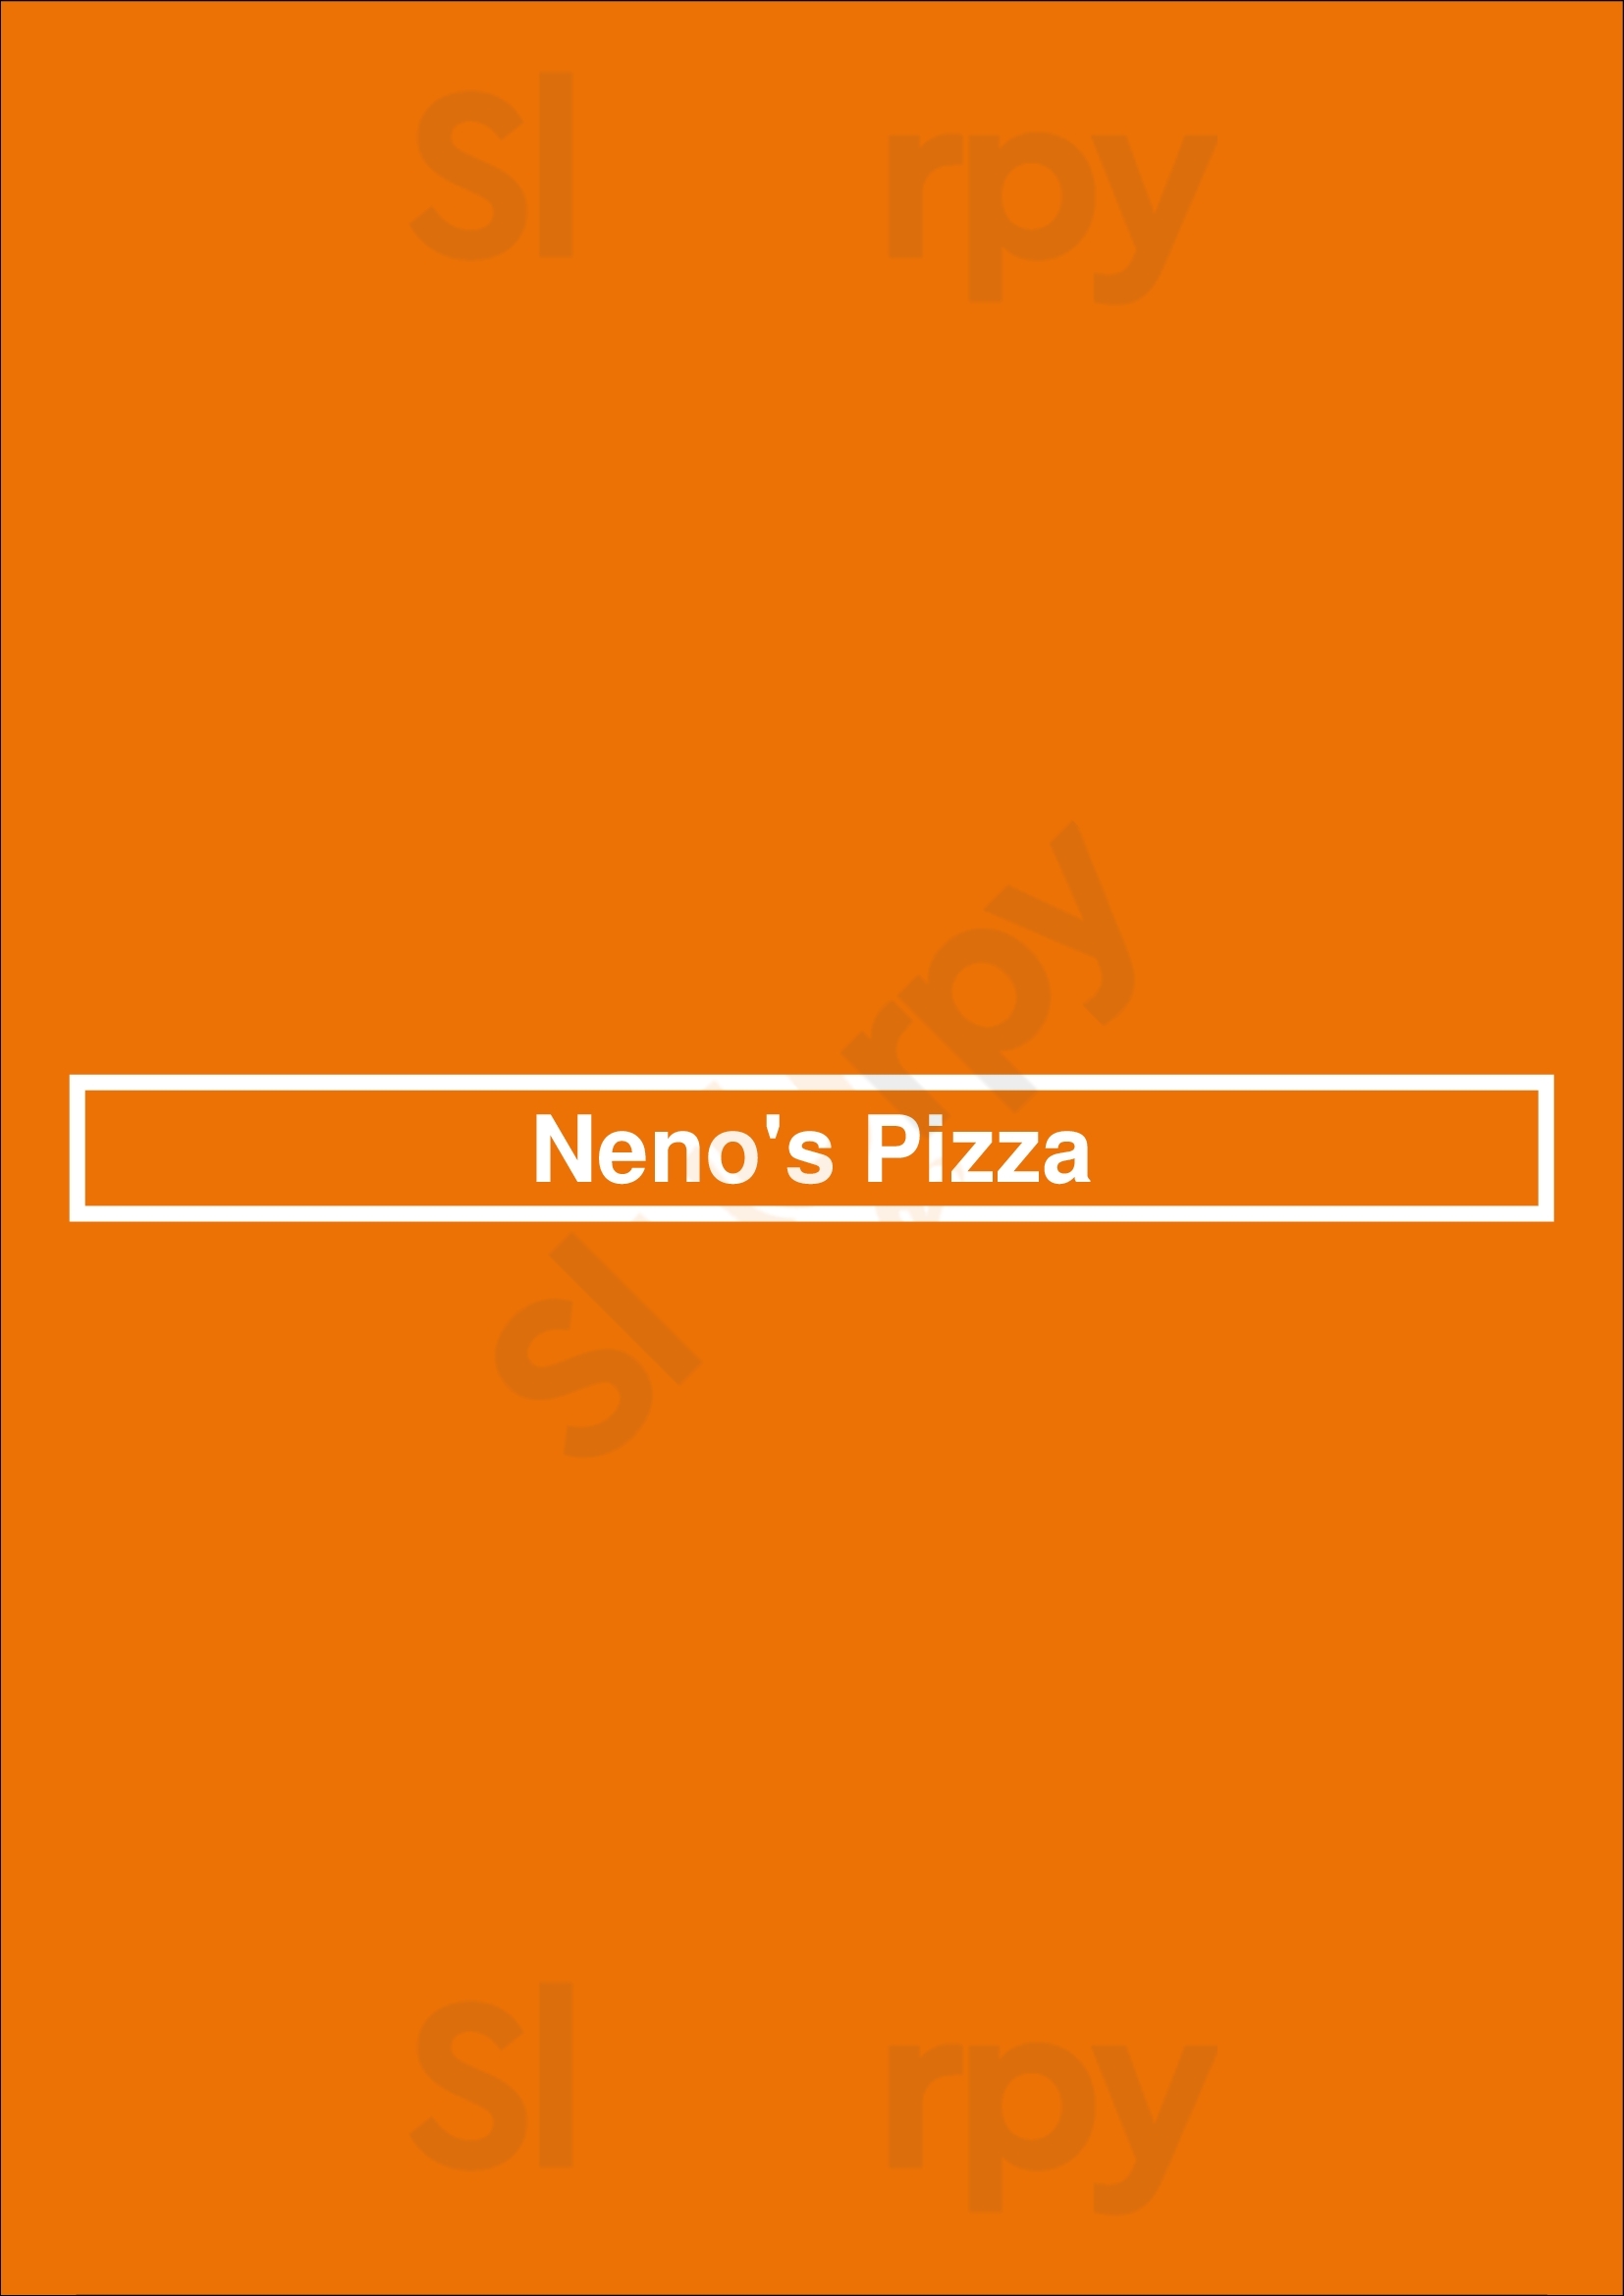 Neno's Pizza Los Angeles Menu - 1